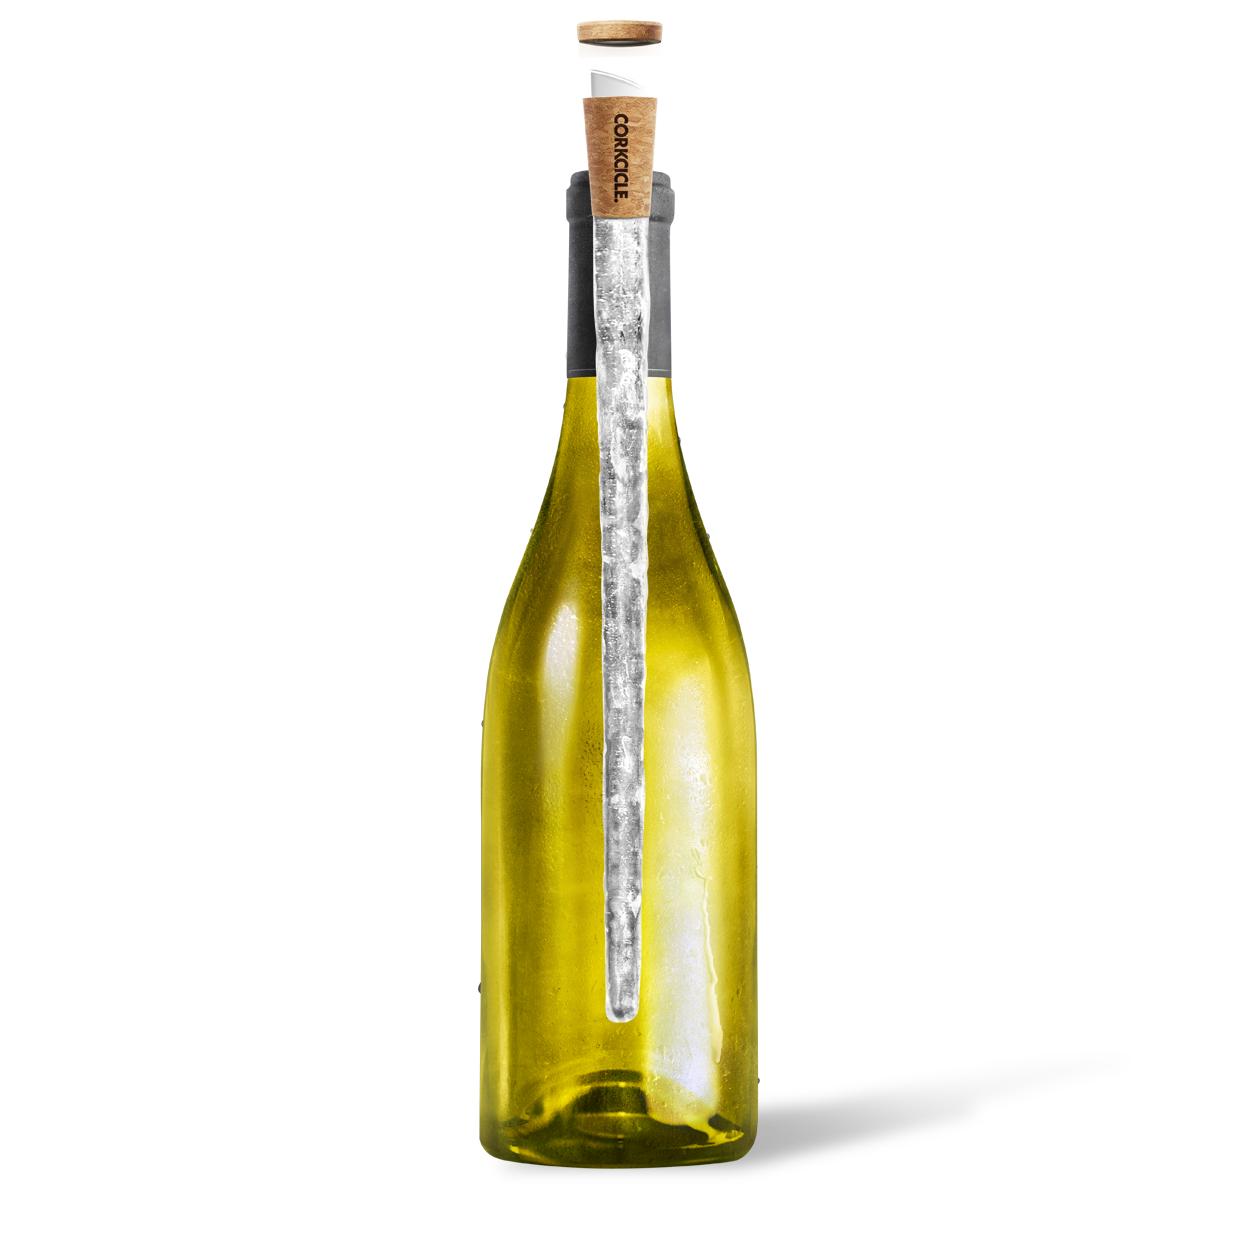 Corkcicle Wine Chiller / CORKCICLE Wine Chiller for Perfect Wine